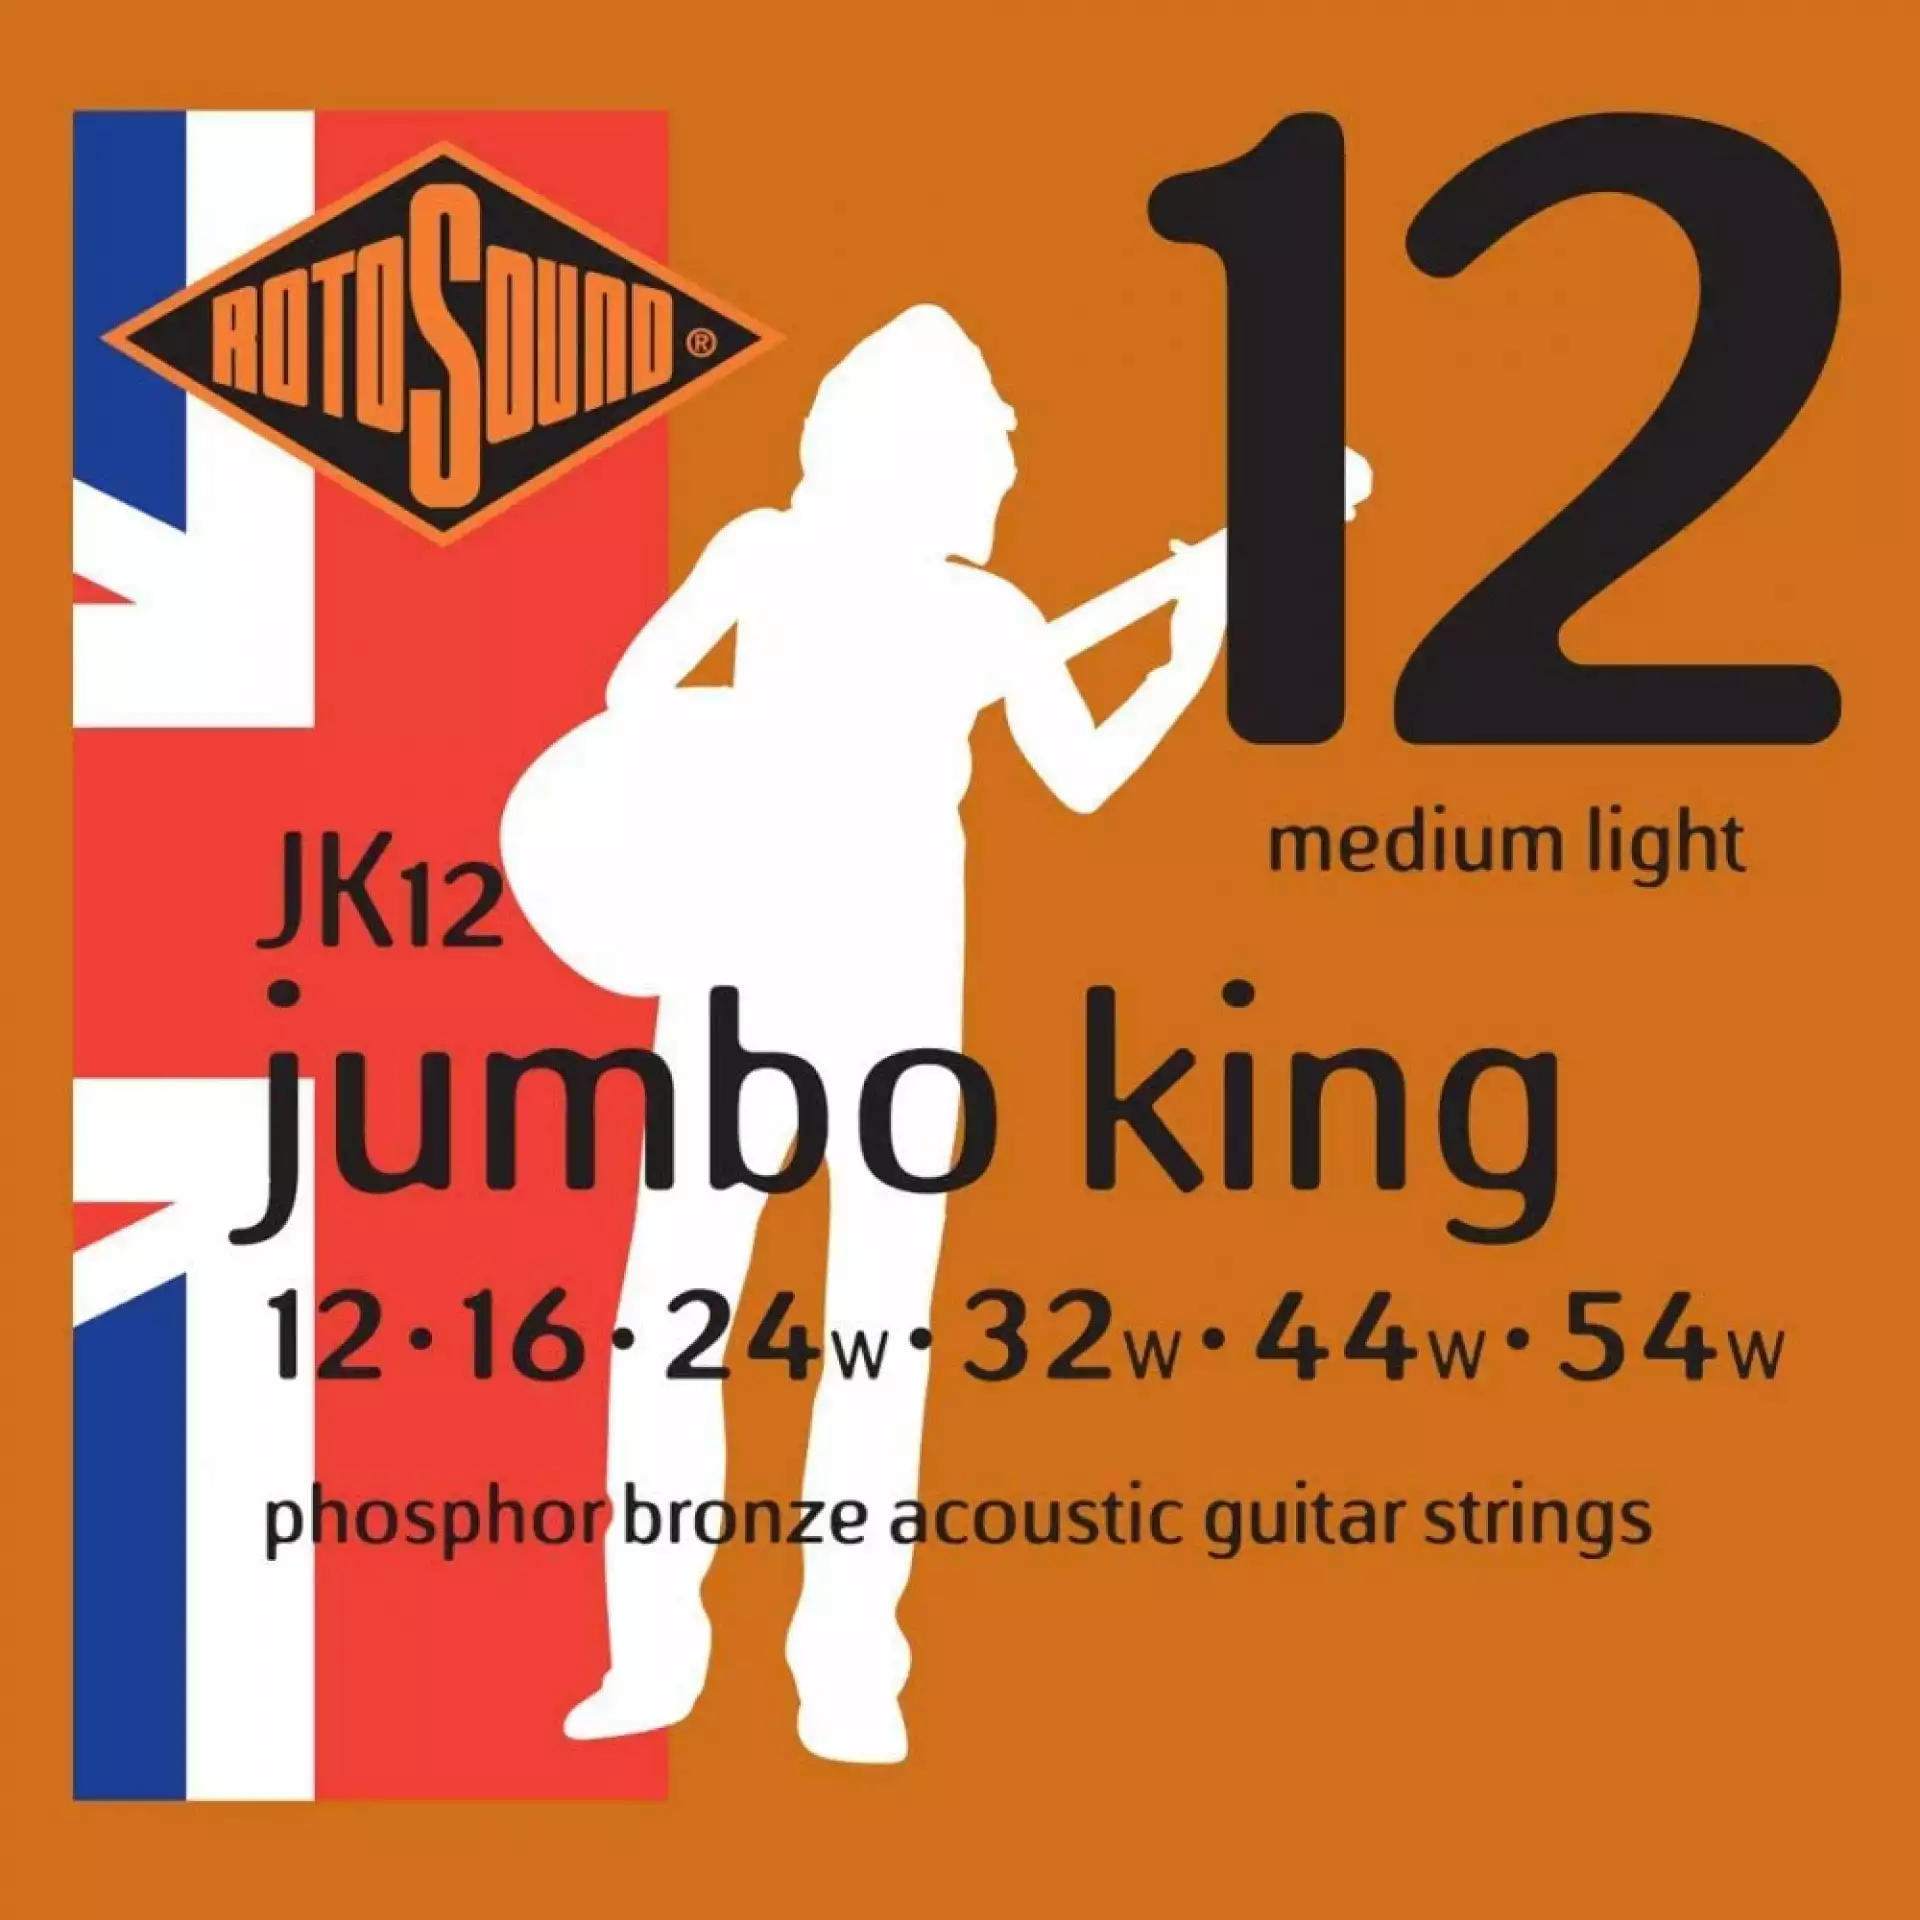 ROTOSOUND JUMBO KING JK12